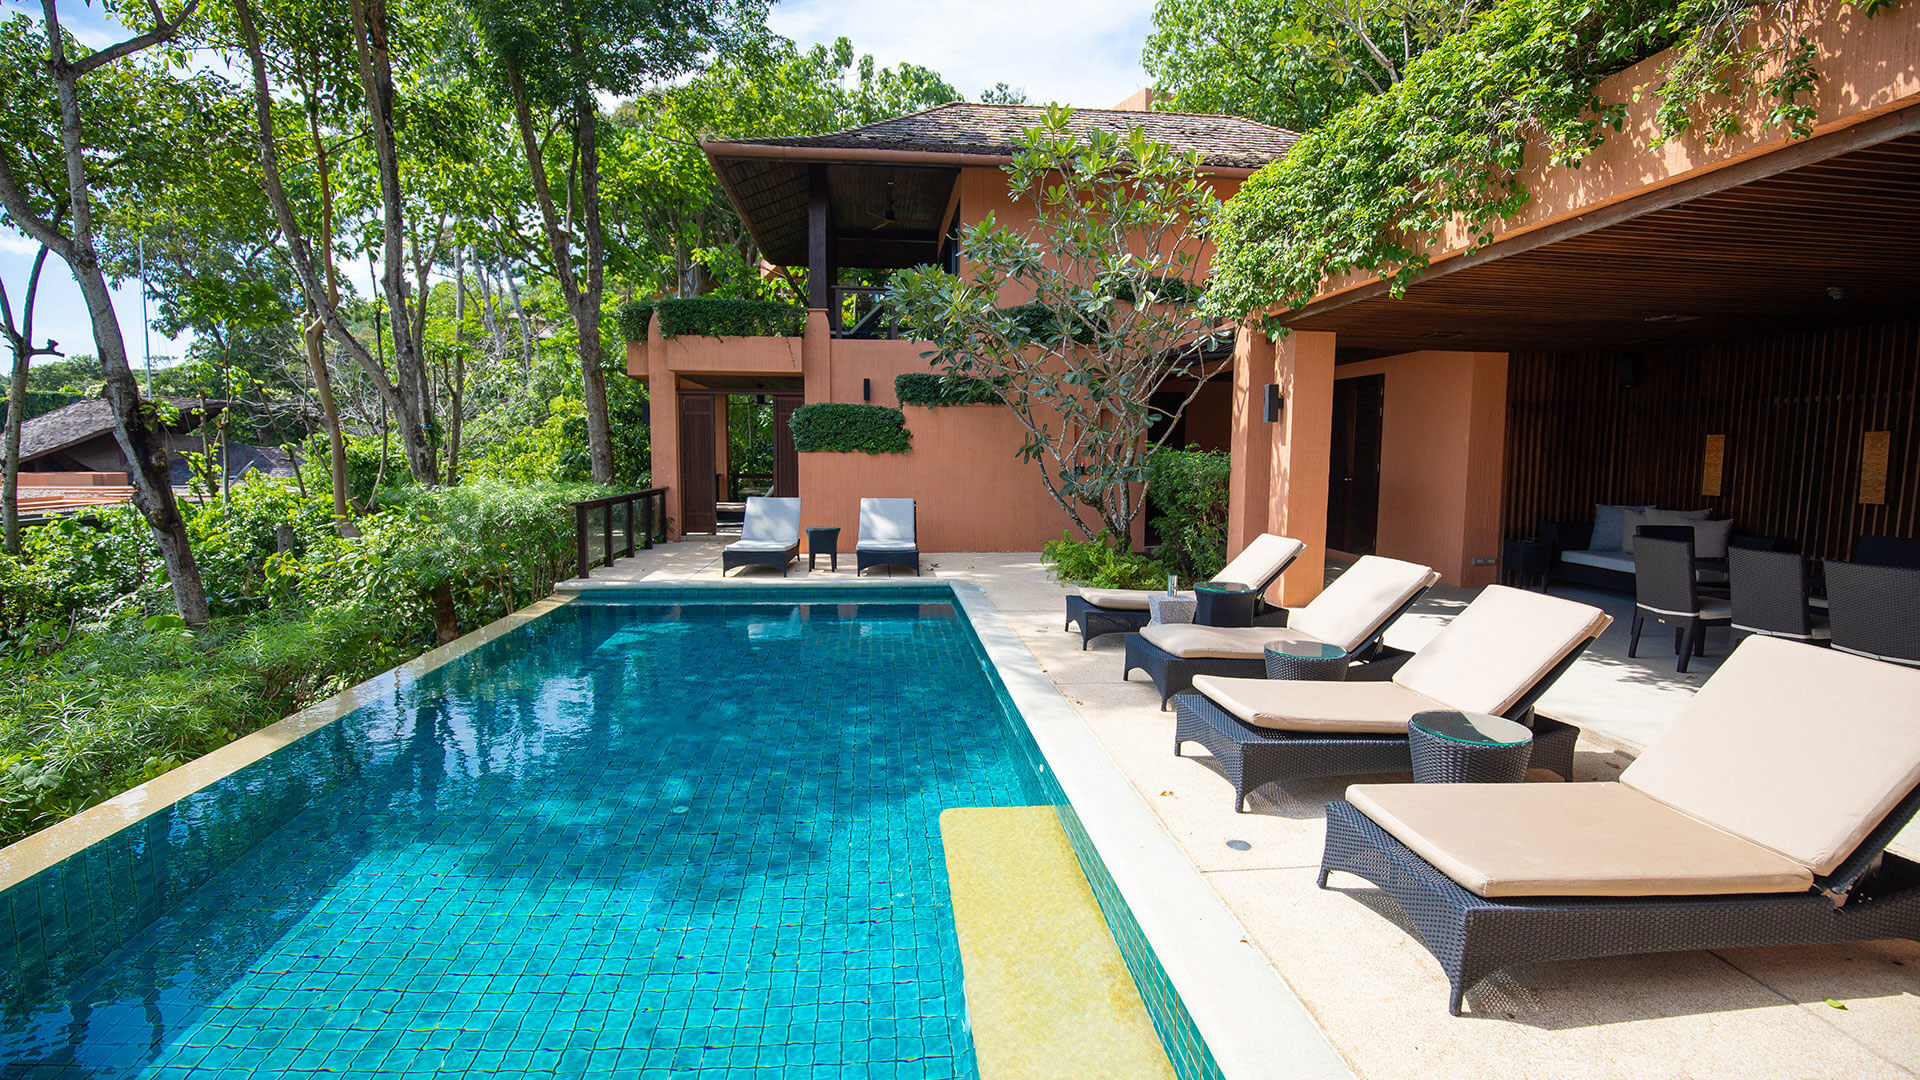 3 bedroom residence villa partial ocean pool view luxury hotel resort phuket